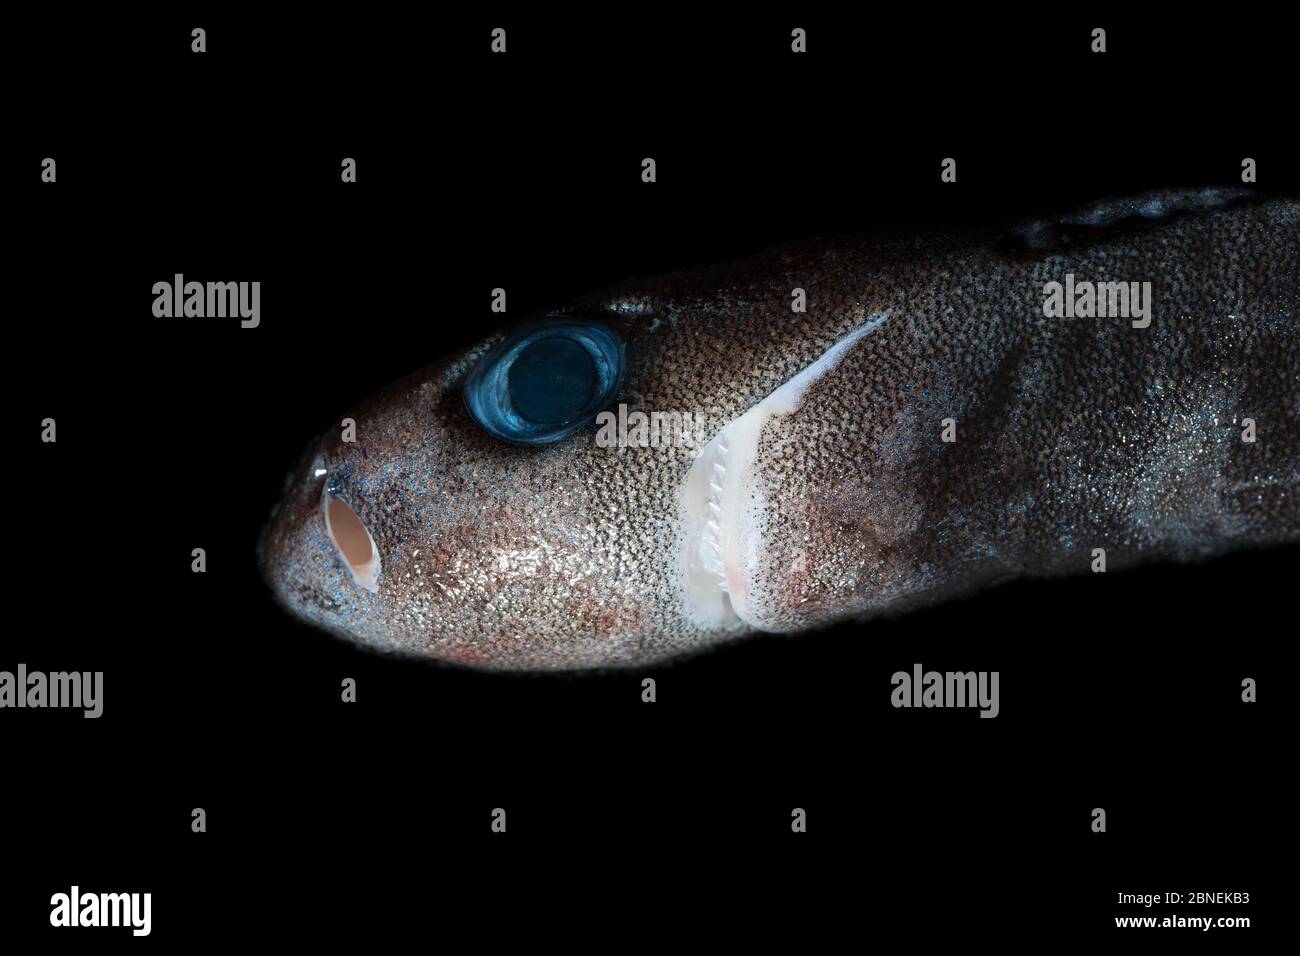 Requin pygmée à Bioluminescence (Euprotomicrus bispinatus) montrant des photophores bleu brillant (organes légers). Captif. Kona, Hawaï, Pacifique central. Banque D'Images